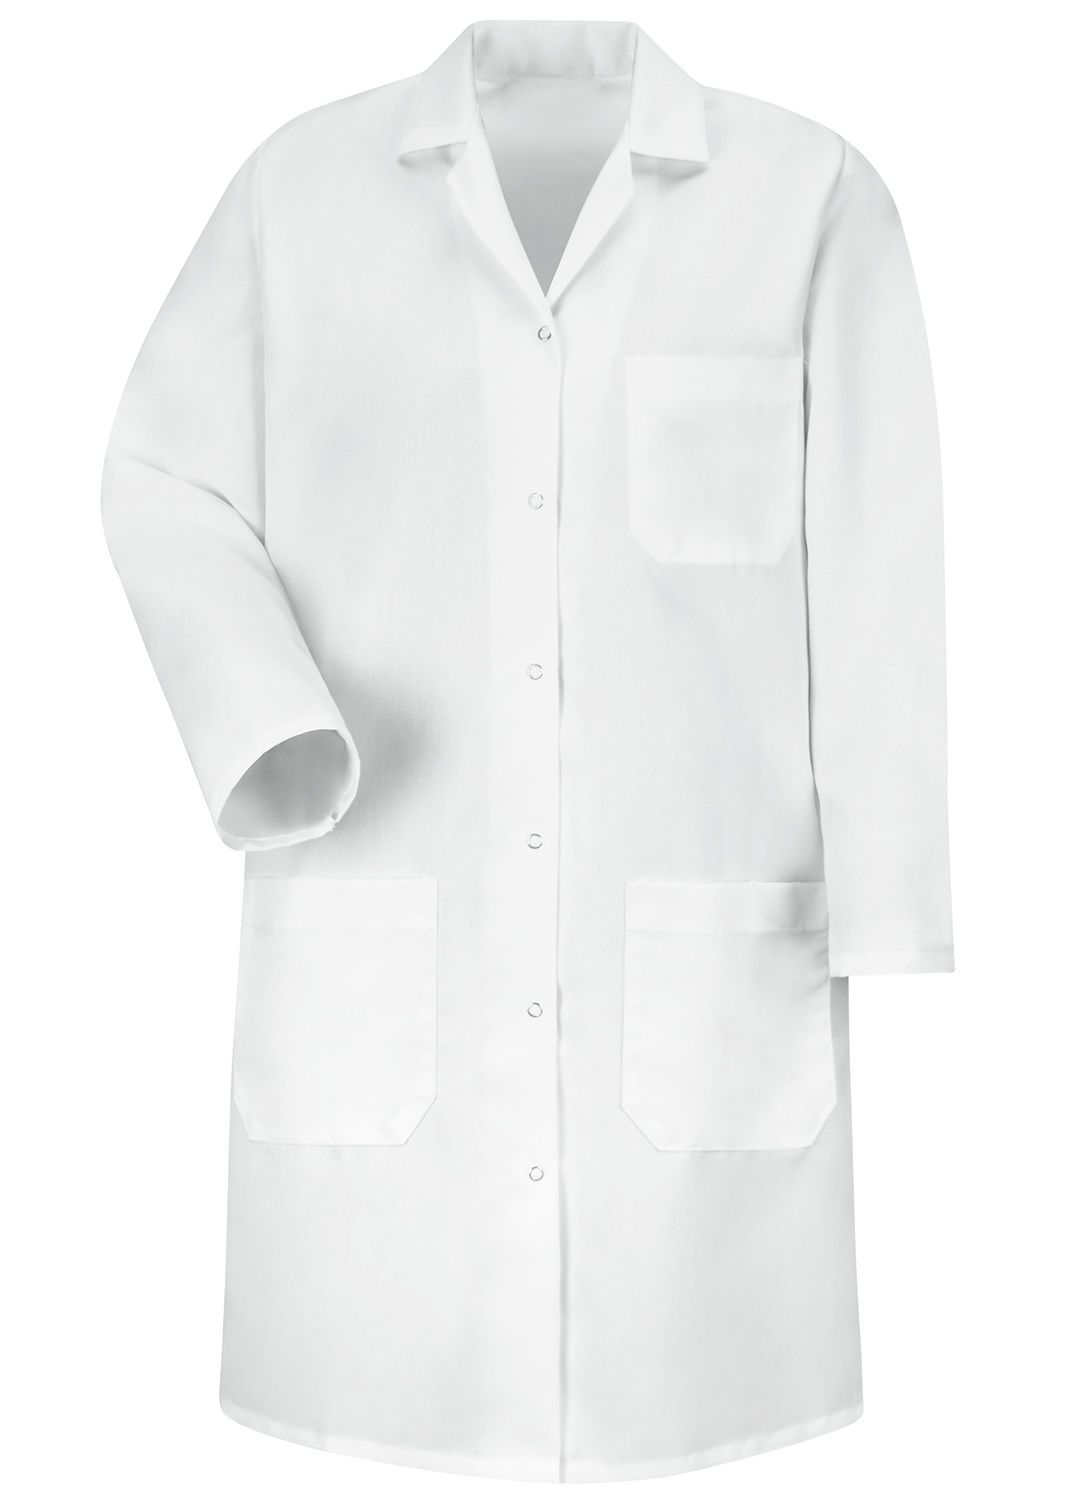 Red Kap Women's White 6-Gripper Front Lab Coat